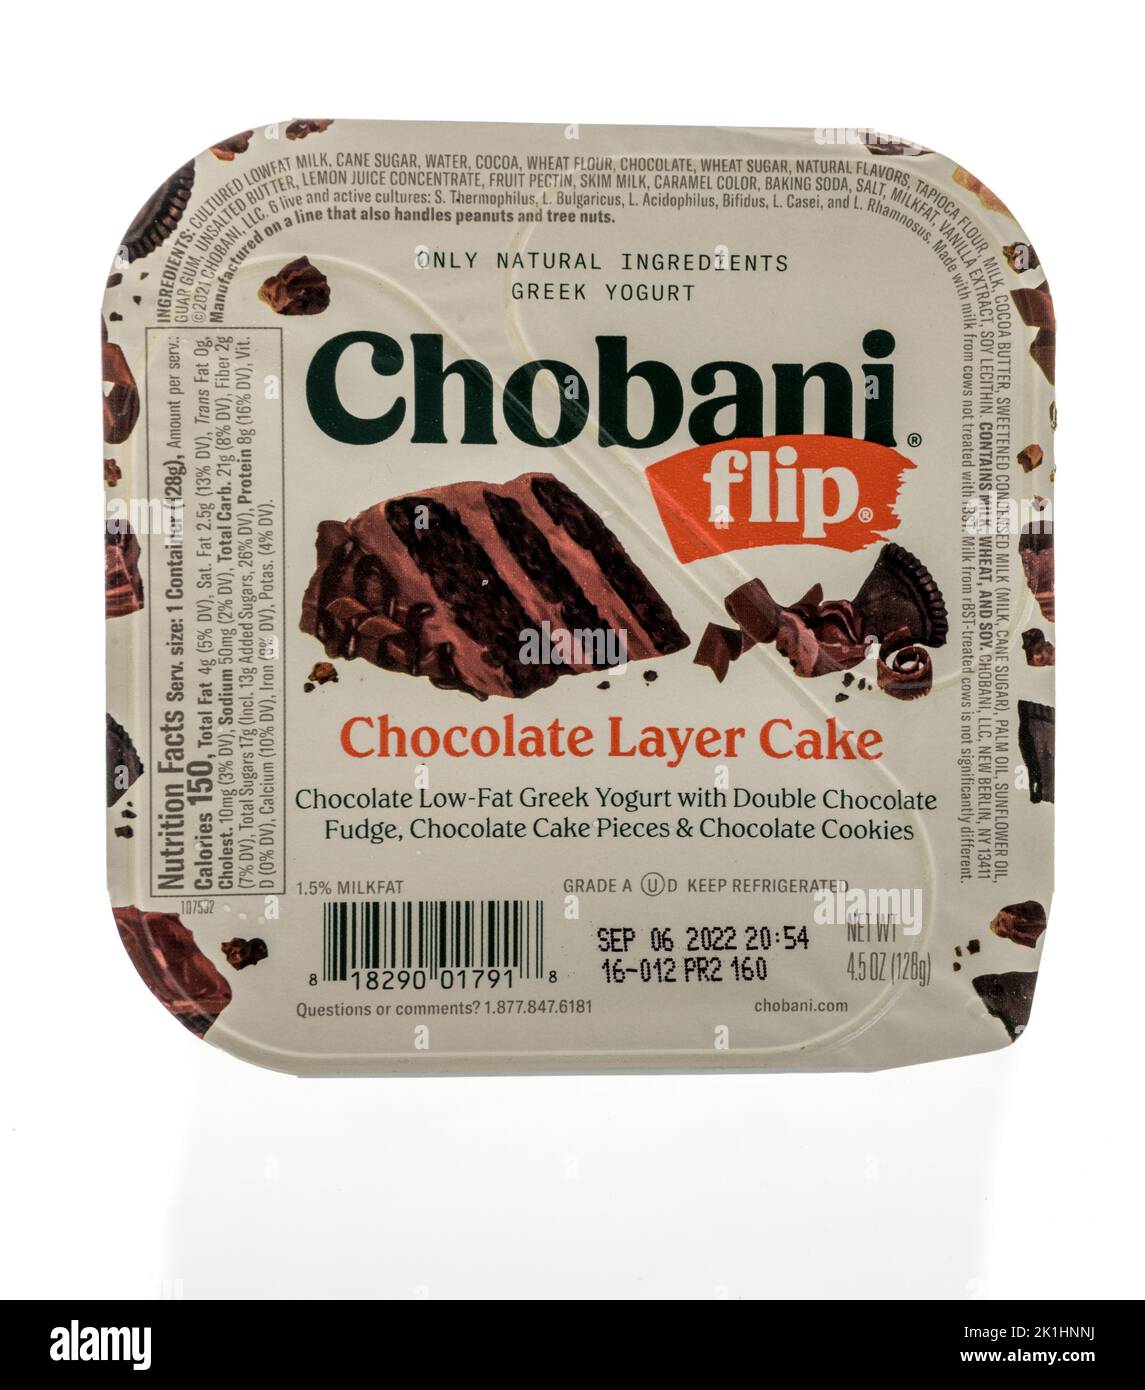 Winneconne, WI - 18 September 2022: A package of Chobani flip chocolate layer cake greek yogurt on an isolated background. Stock Photo